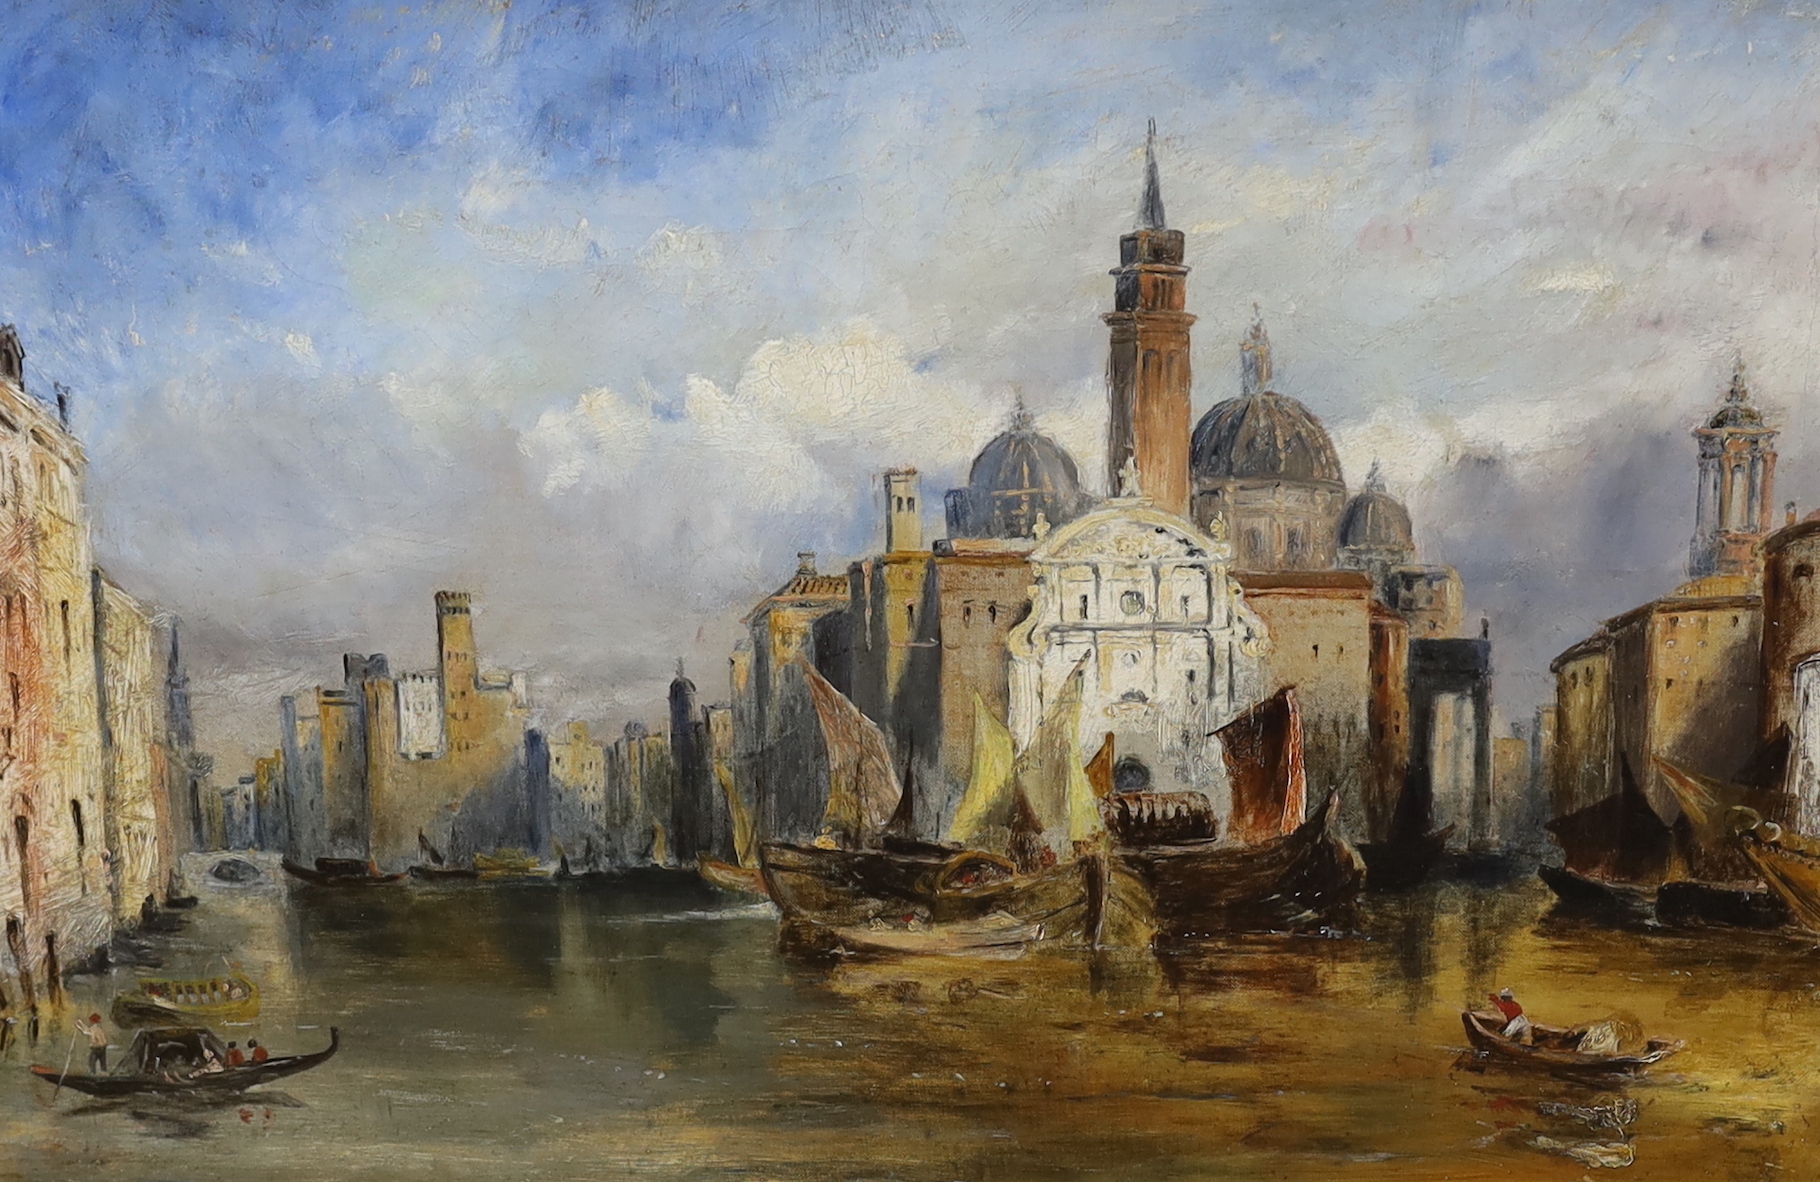 19th century English School, oil on canvas, View of Venice with gondolas, 58 x 39cm